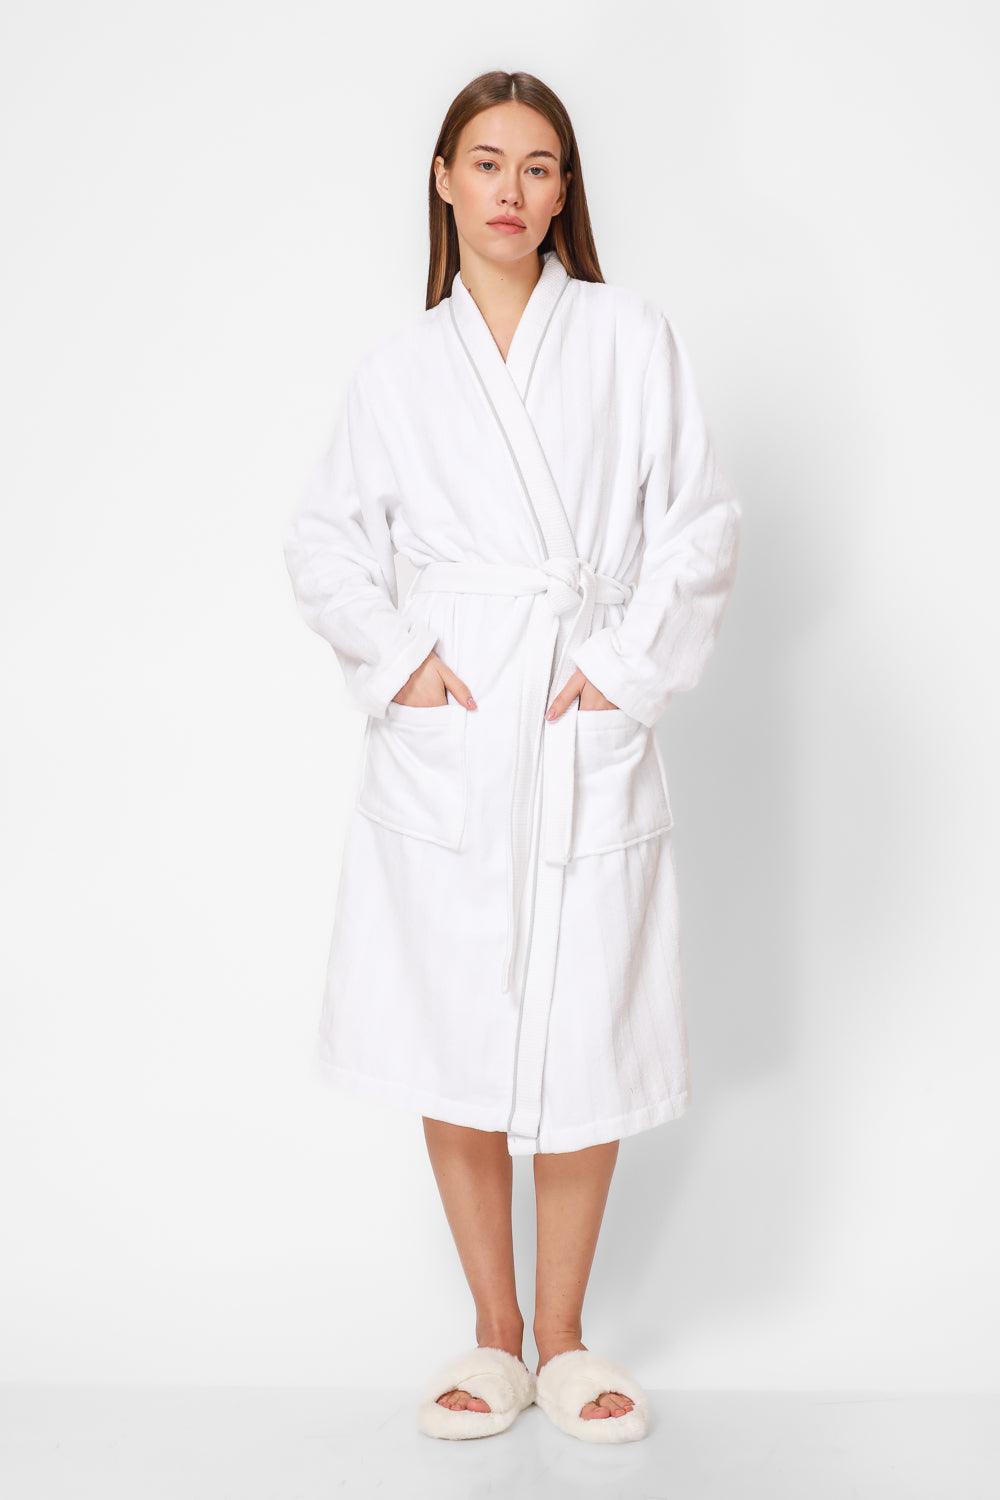 KENNETH COLE - חלוק מגבת אריגת פסים בצבע לבן - MASHBIR//365